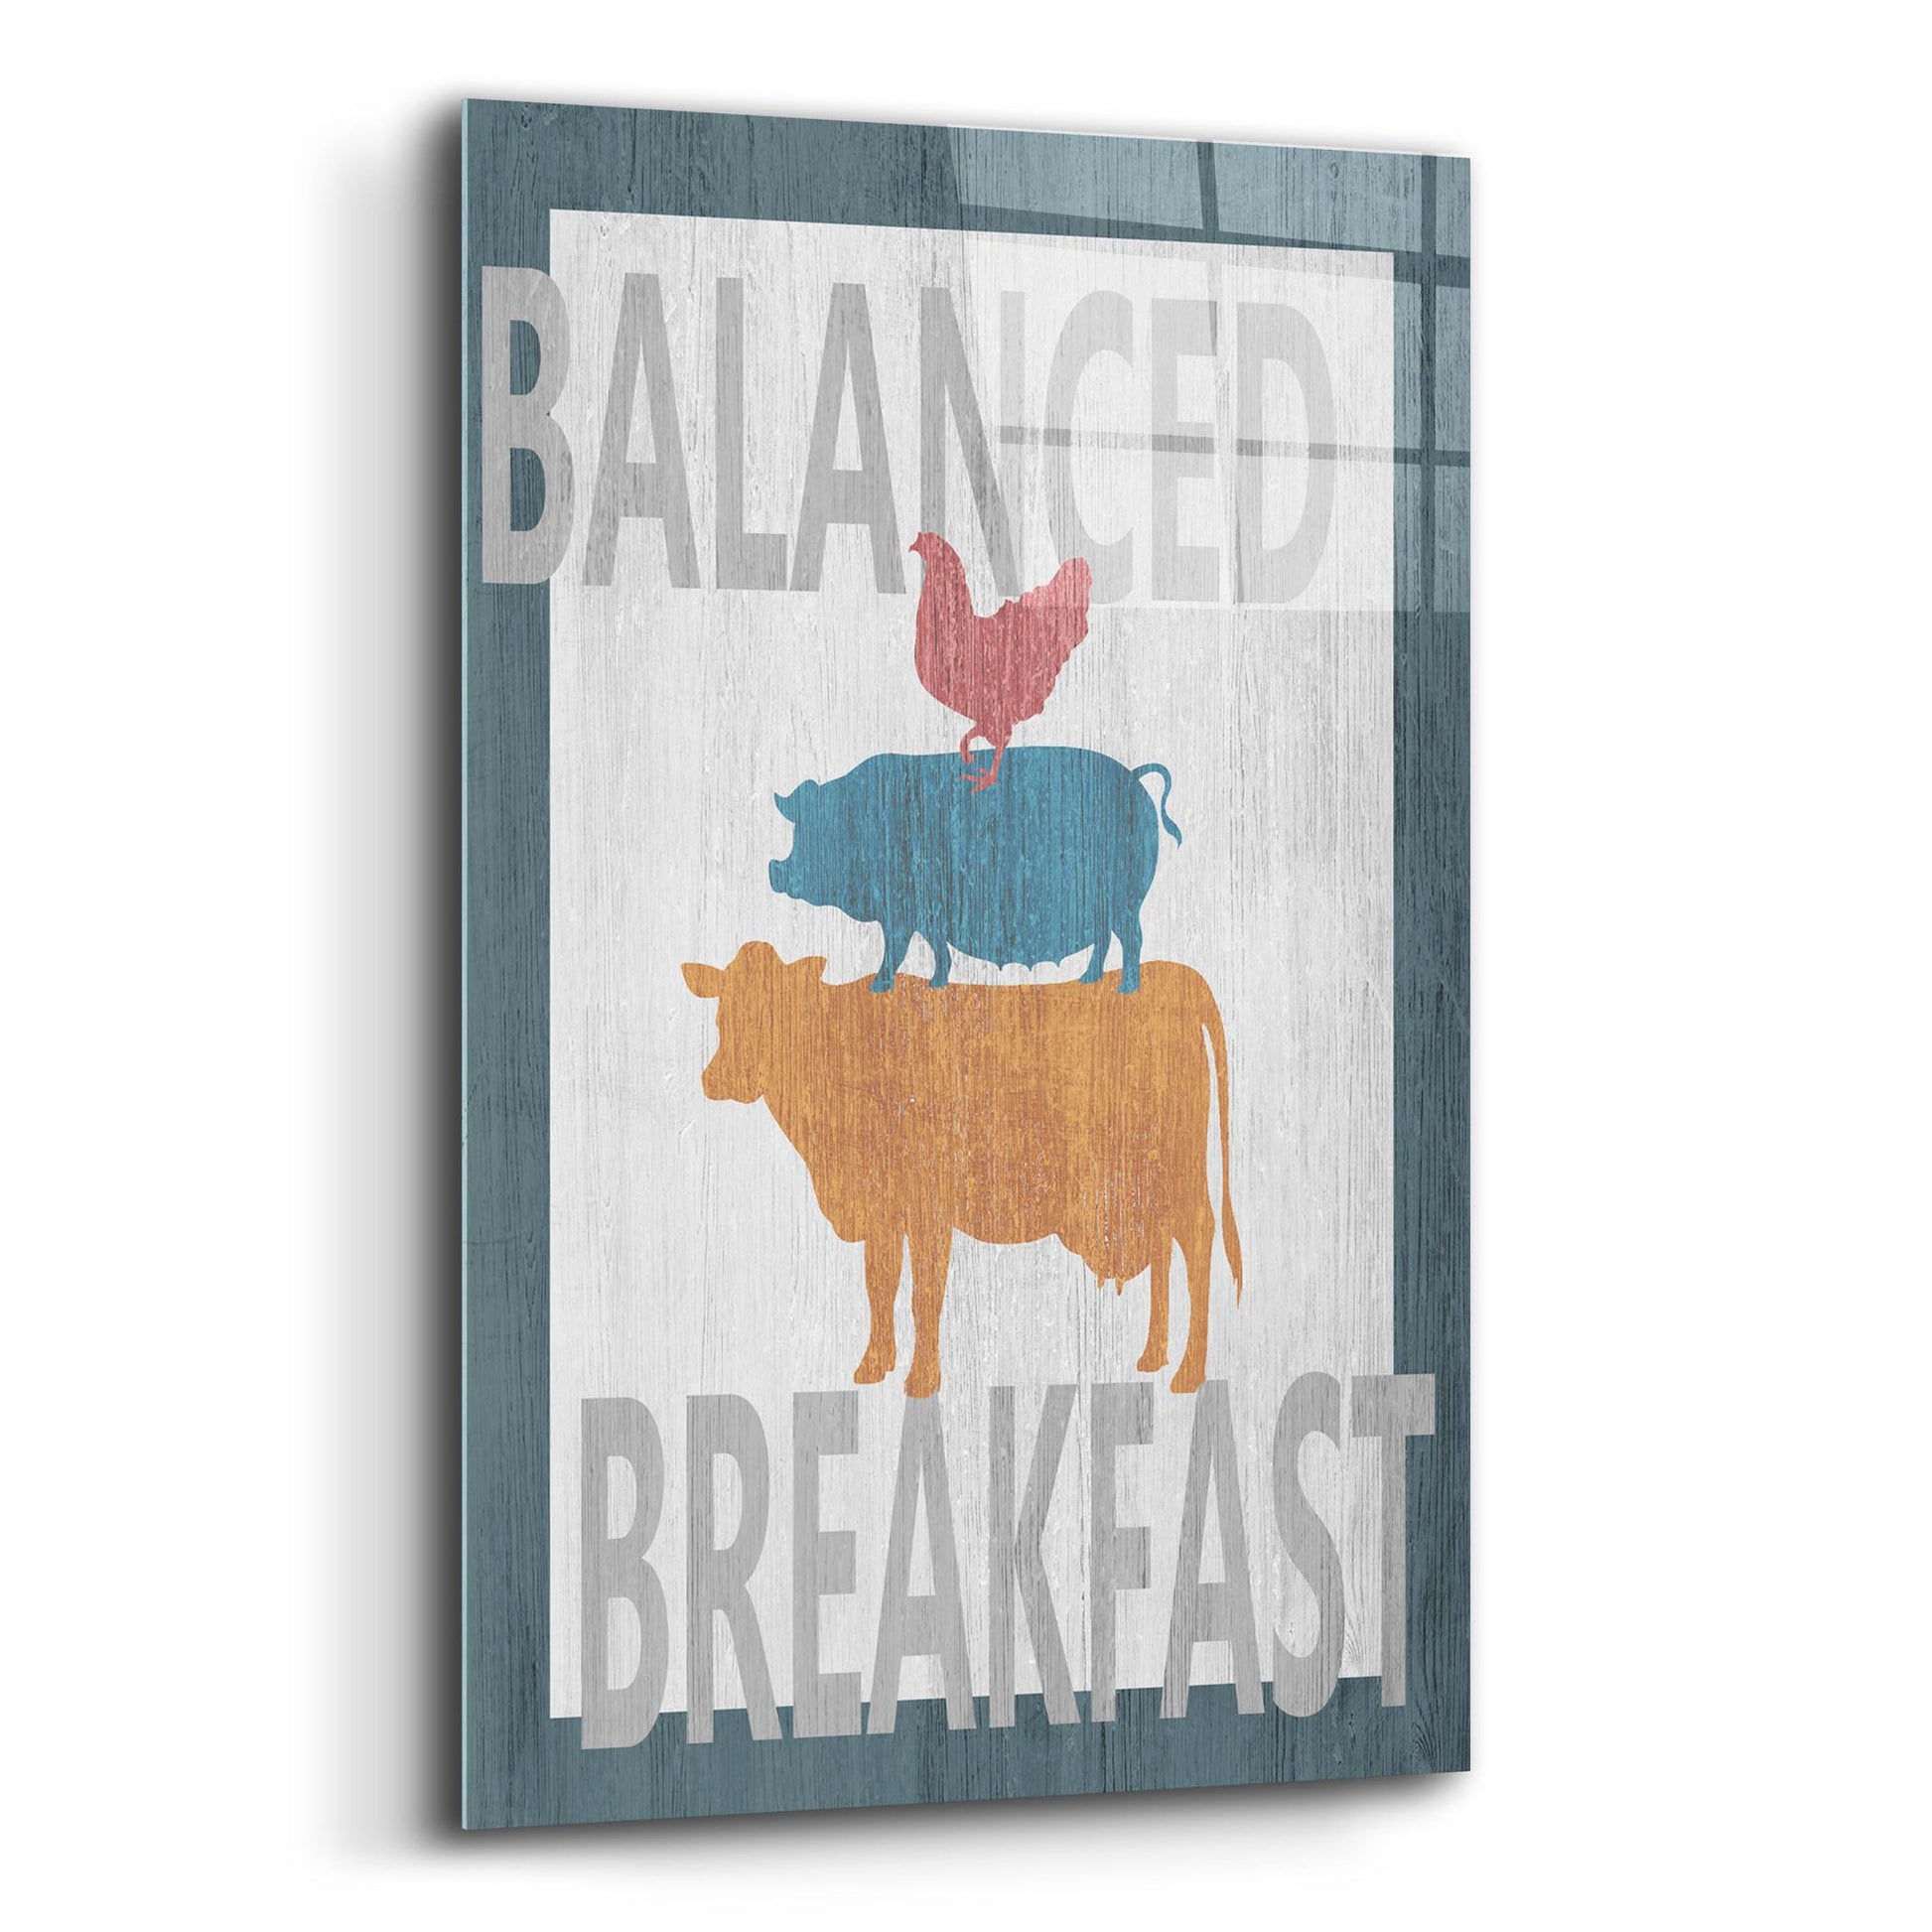 Epic Art ' Balanced Breakfast One' by Alicia Soave, Acrylic Glass Wall Art,12x16